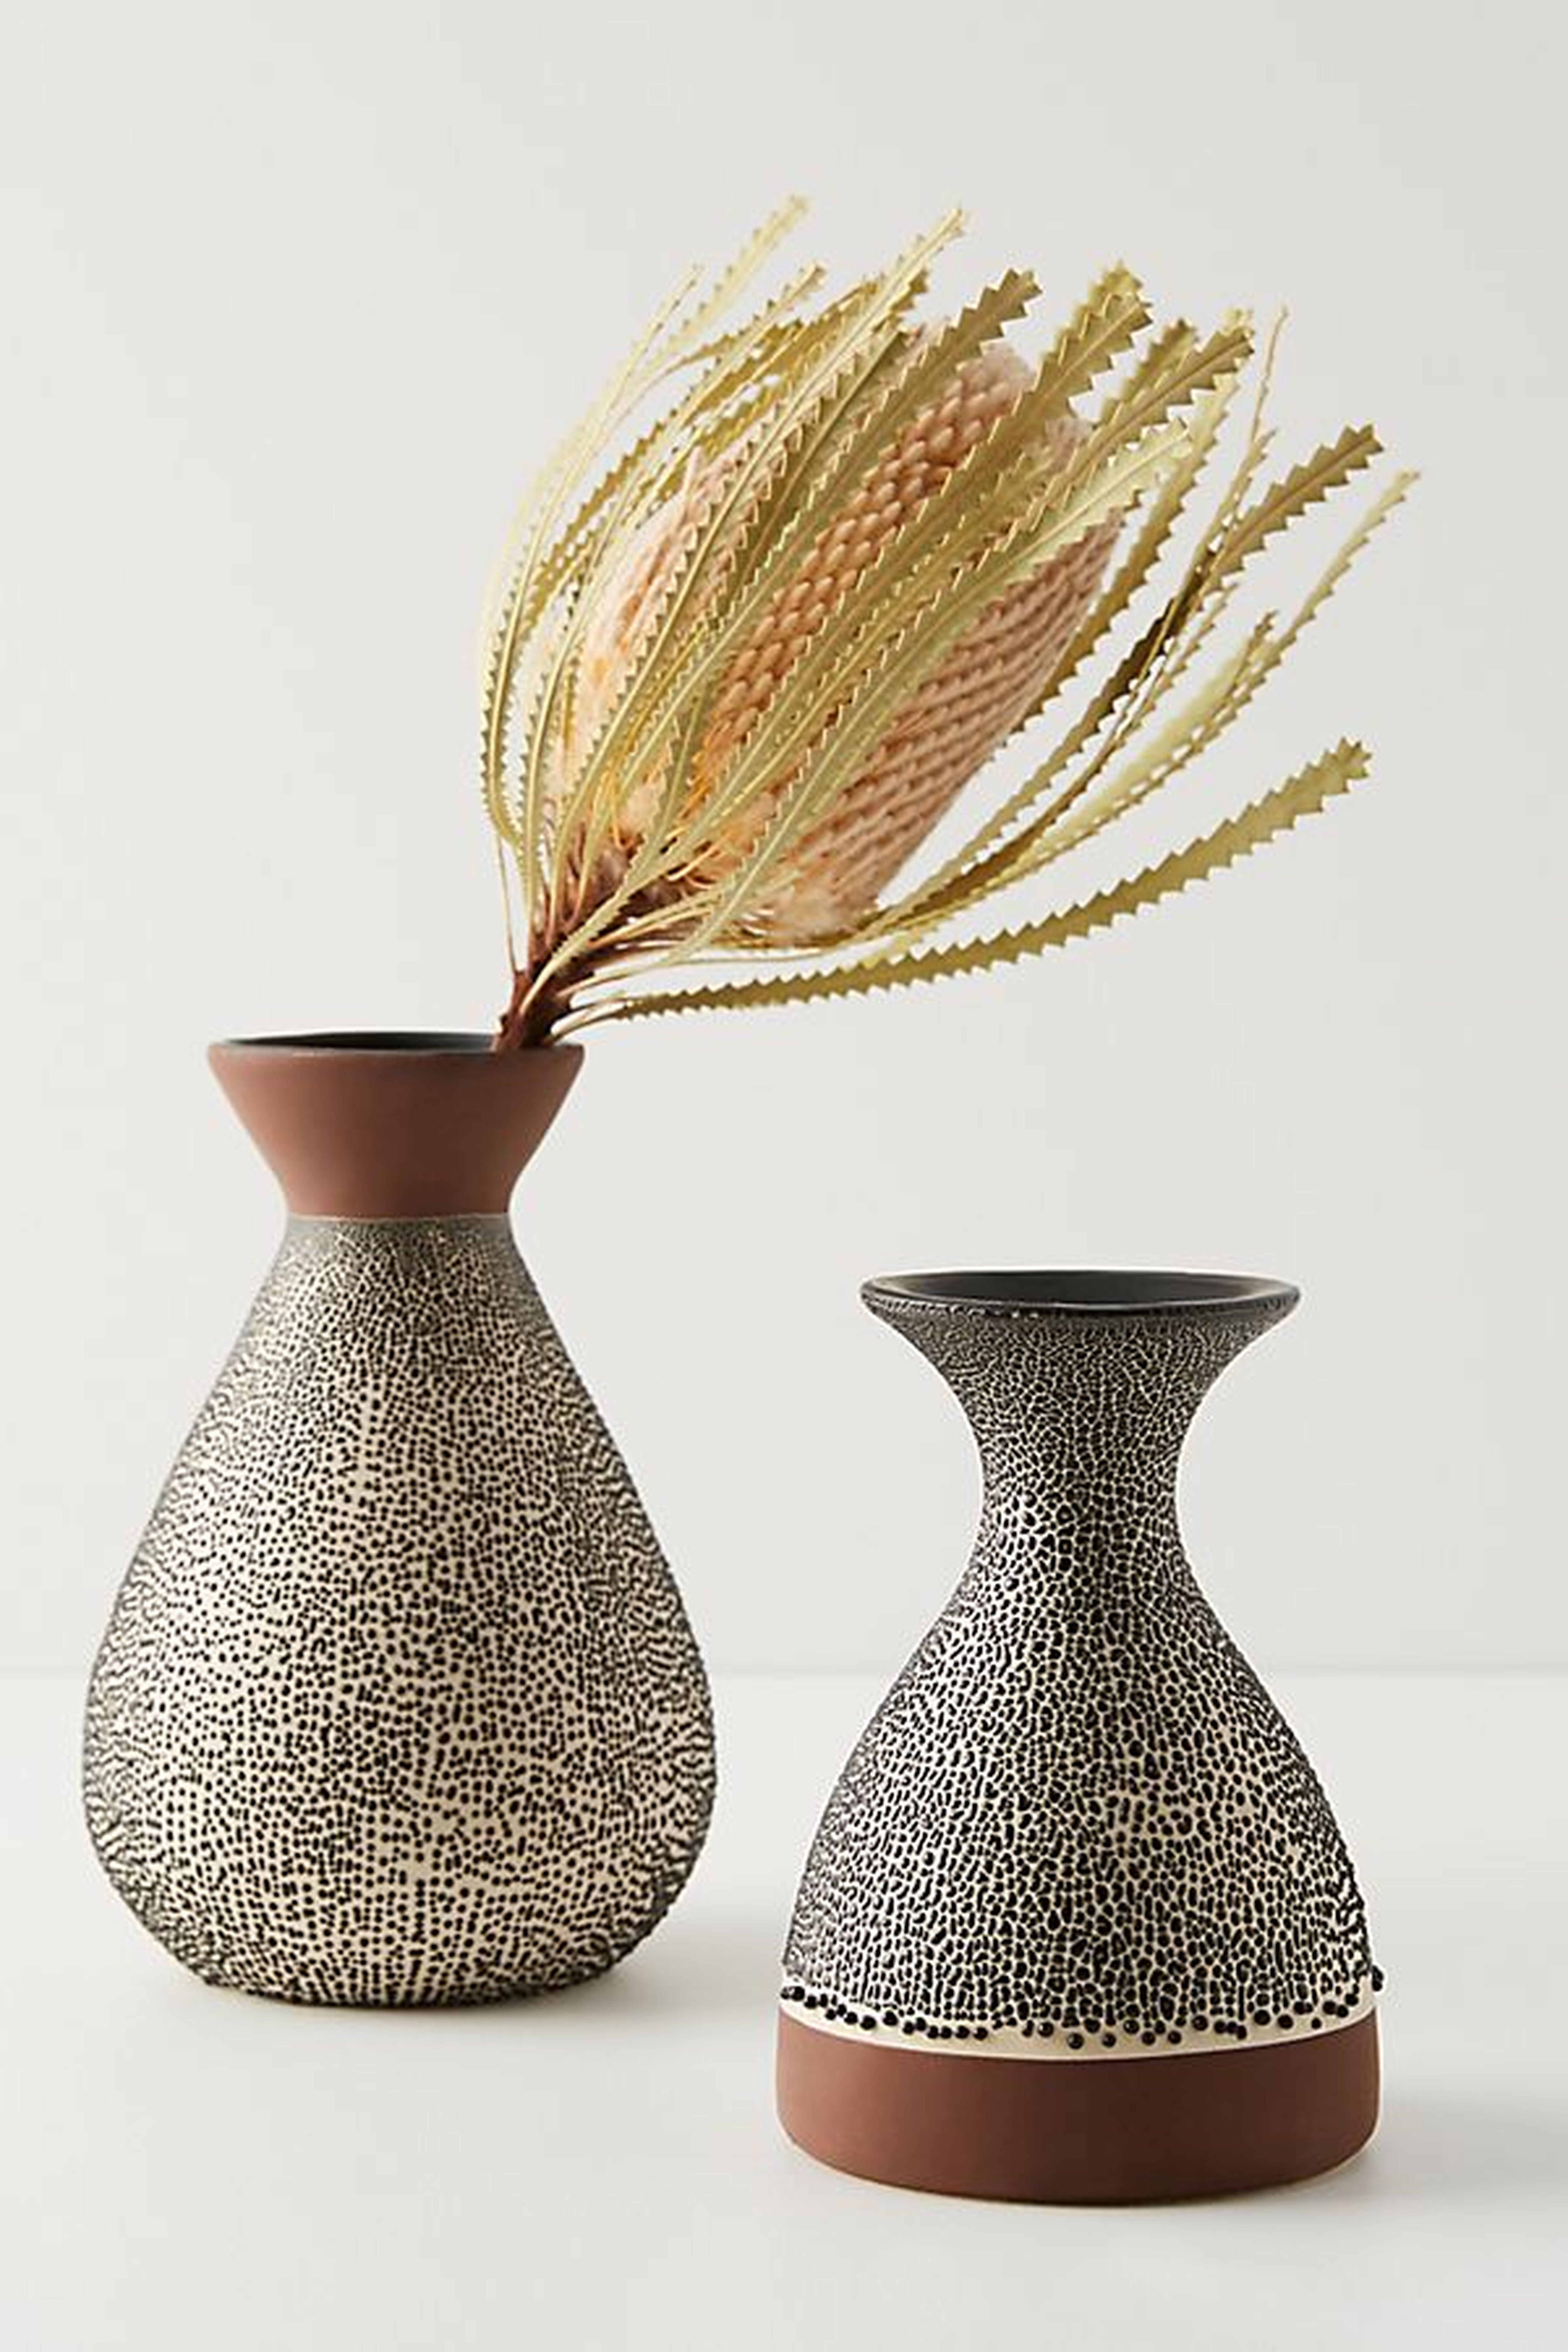 Spotted Ceramic Vase - Anthropologie